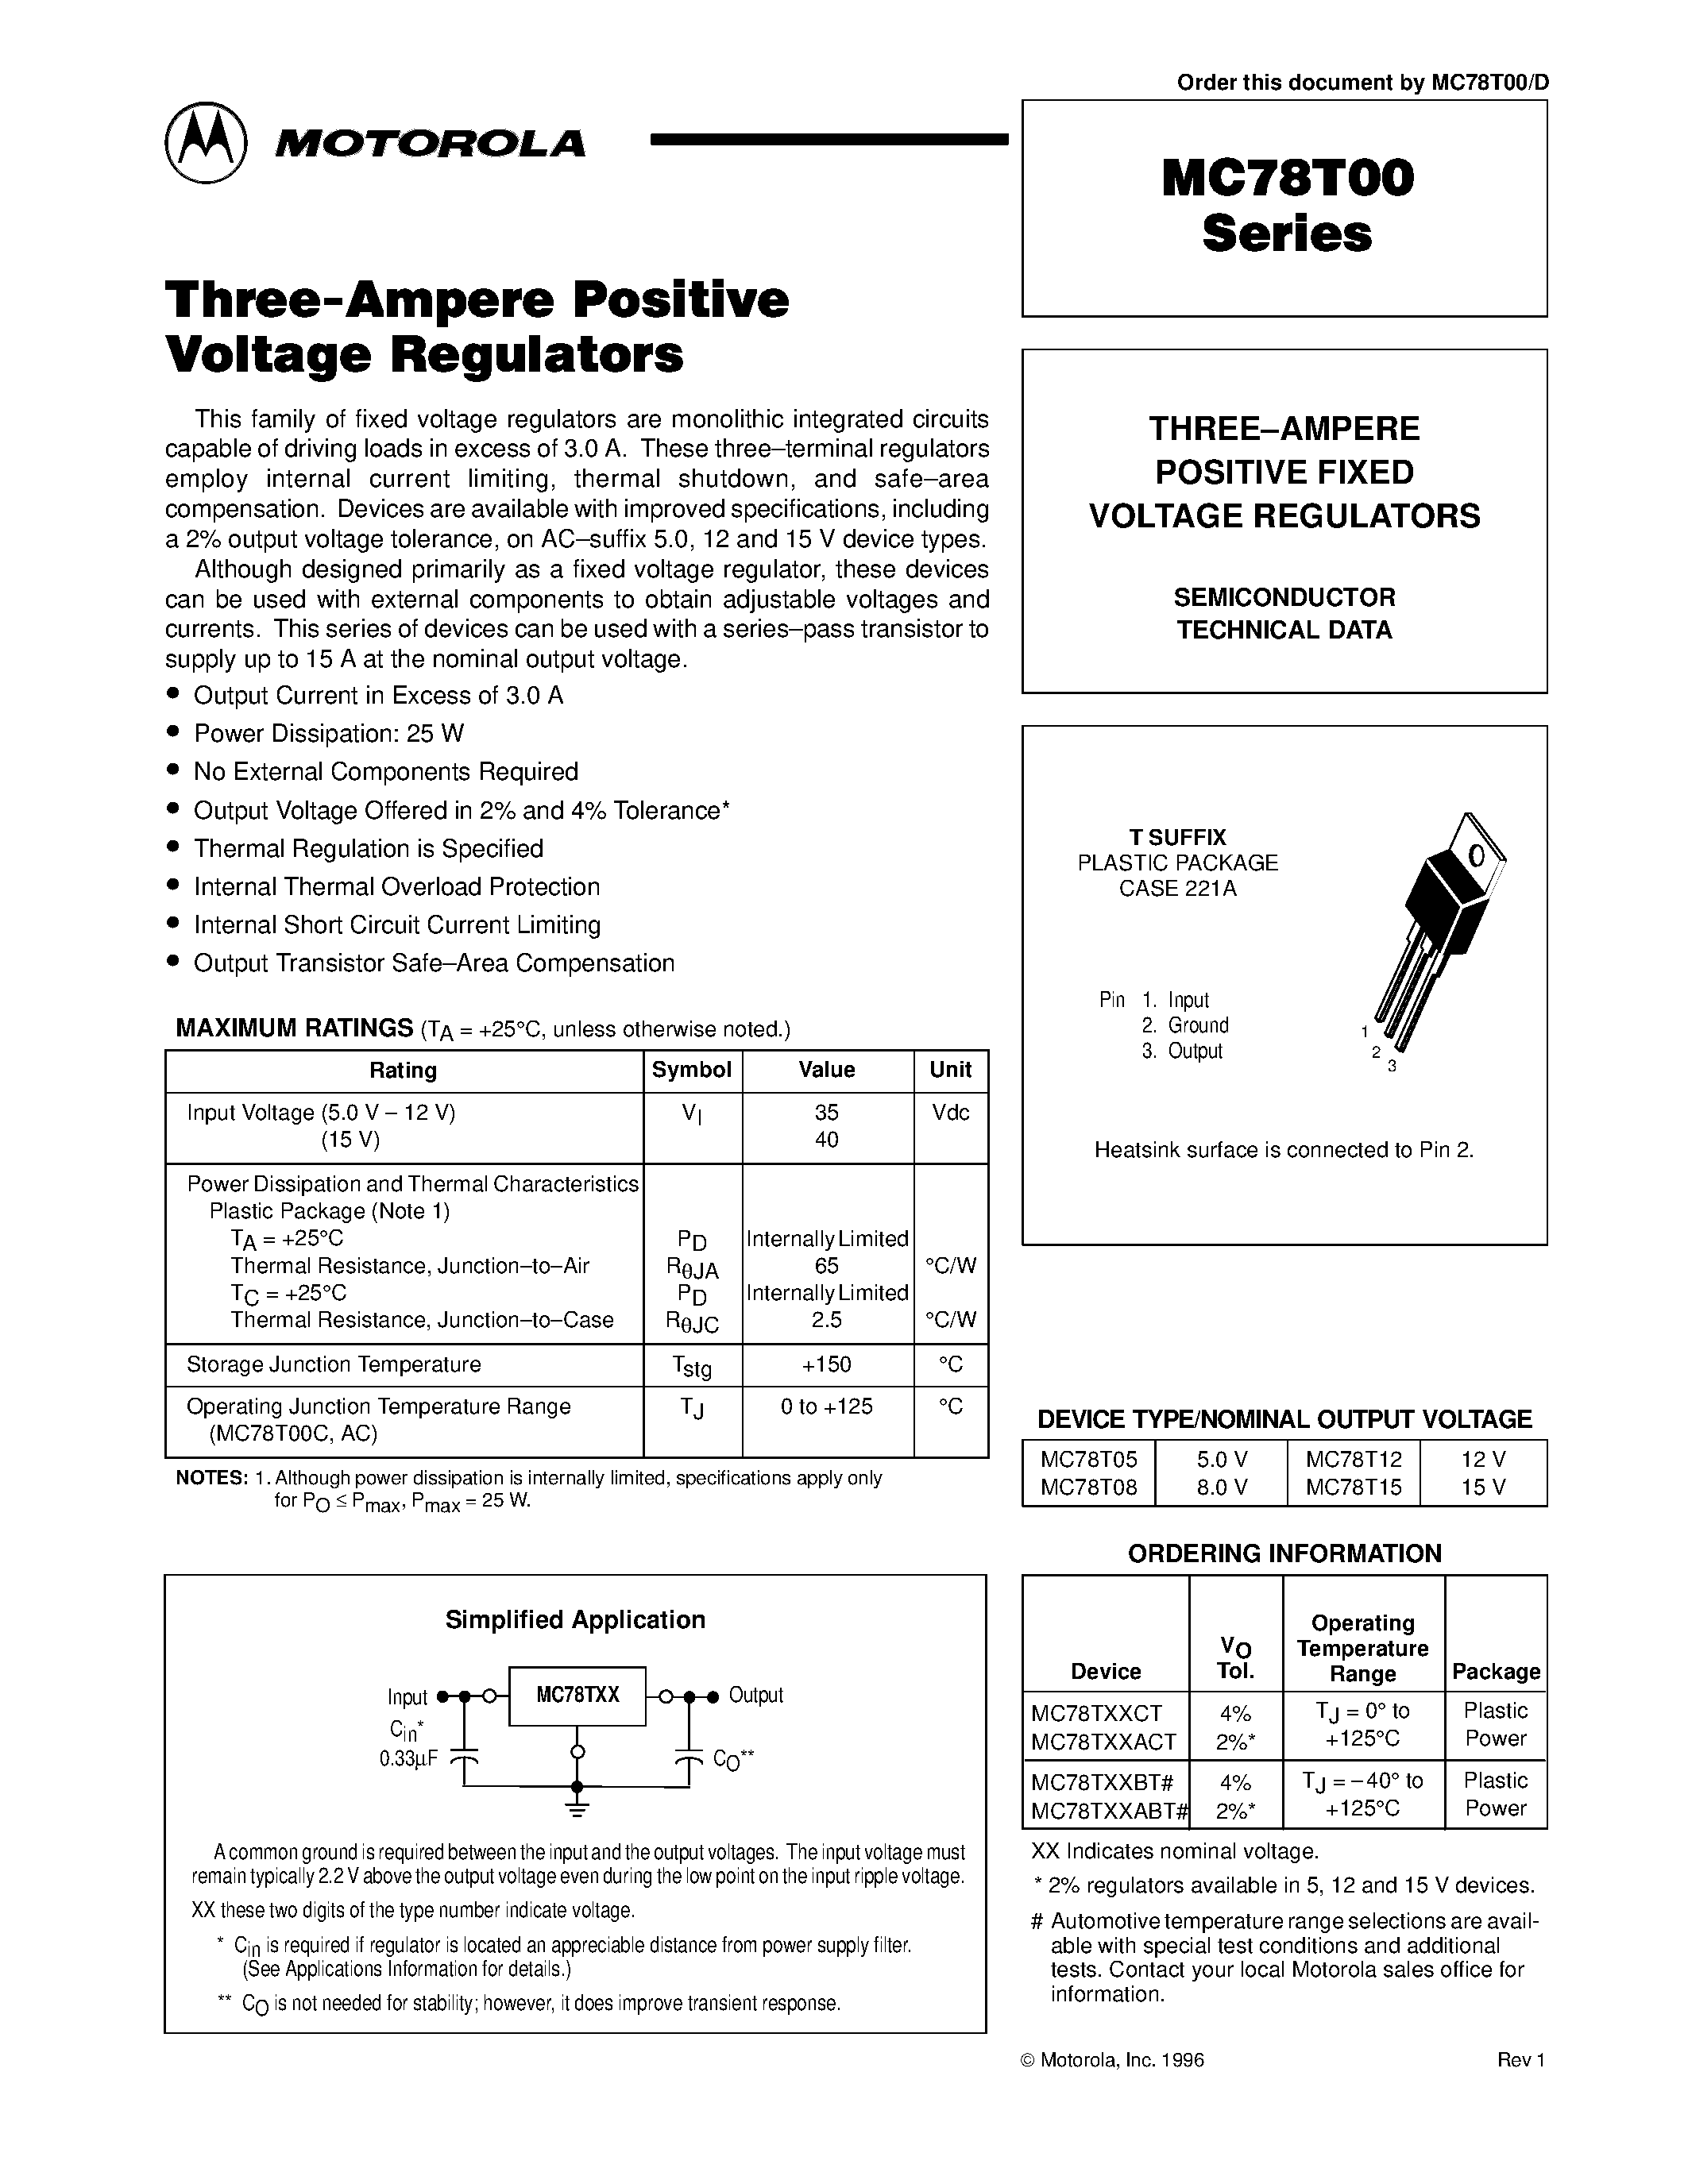 Datasheet MC78T05CTG - THREE-AMPERE POSITIVE FIXED VOLTAGE REGULATORS page 1